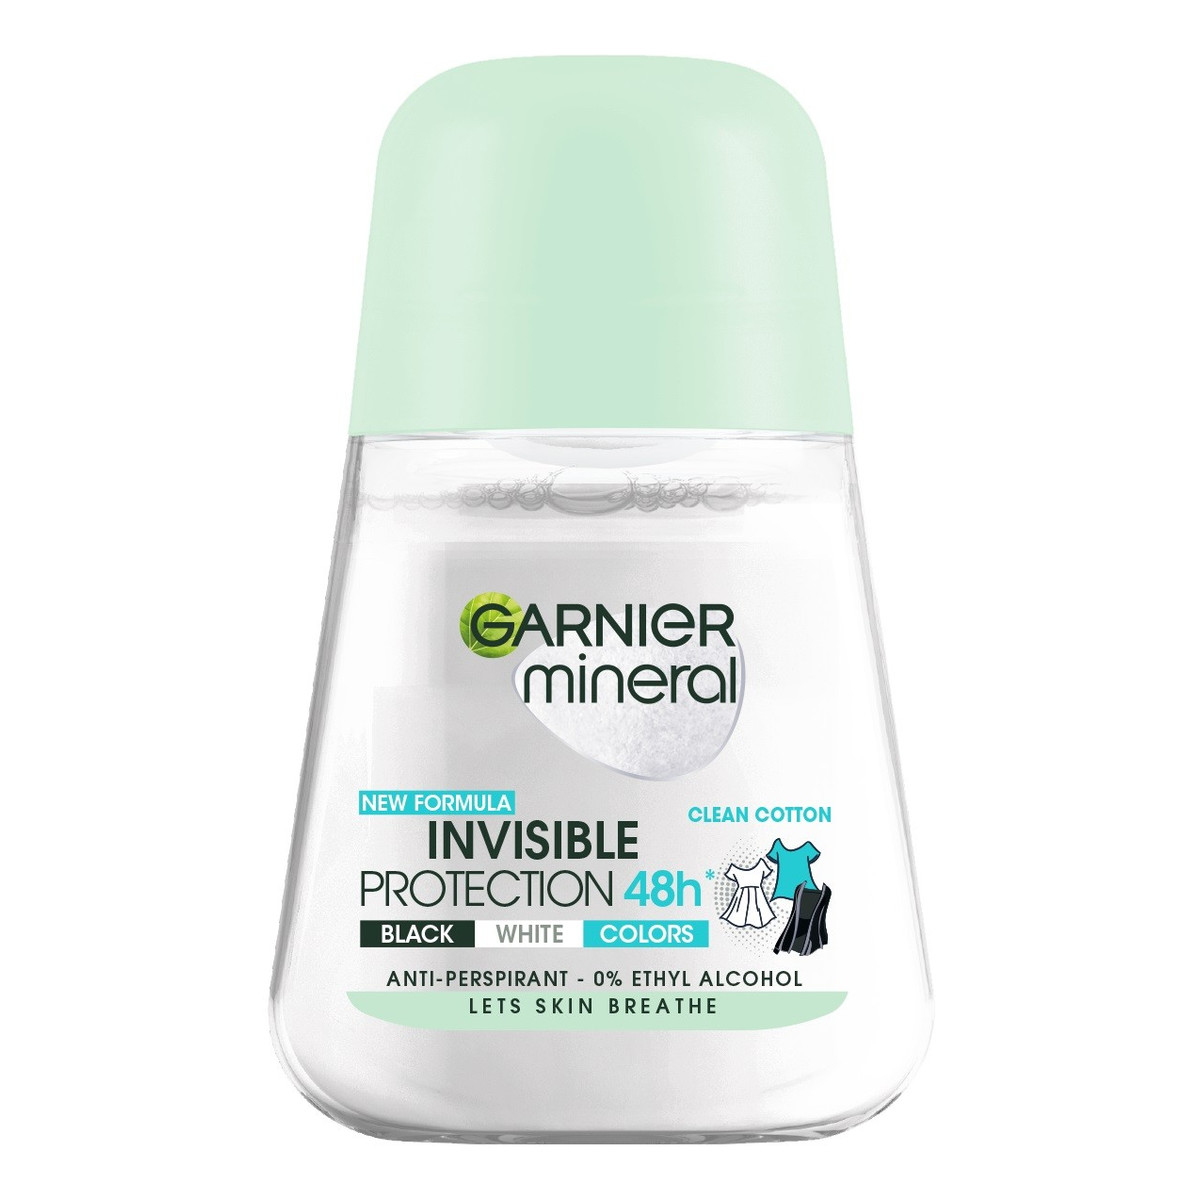 Garnier Mineral Dezodorant roll-on Invisible Protection 48h Clean Cotton- Black White Colors 50ml